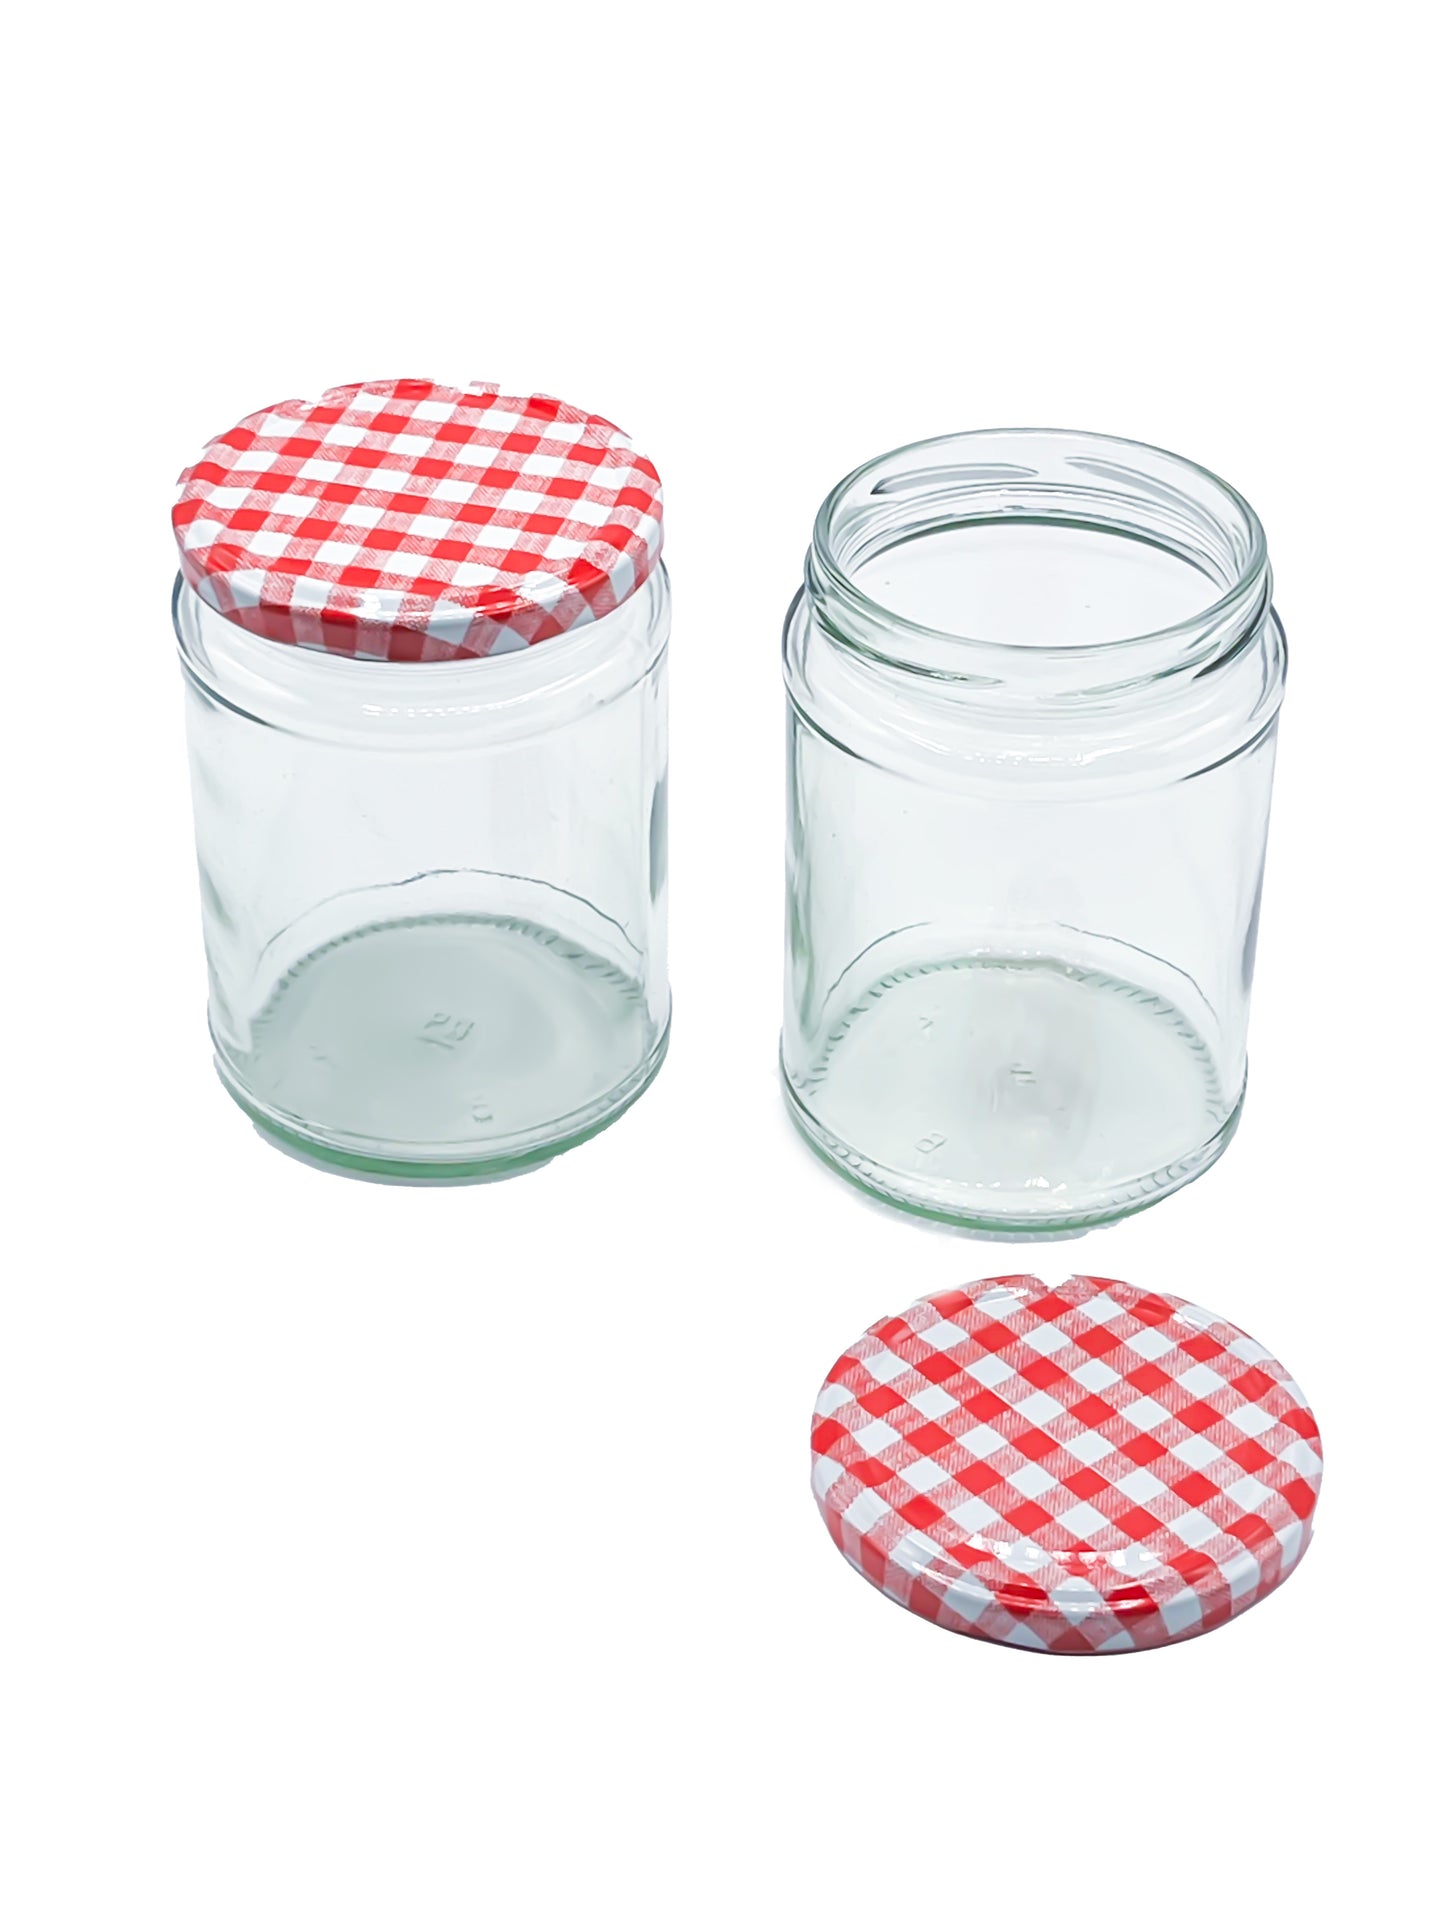 500ml Glass Jars Preserving Food Jars with Twist off Locking Red Gingham Lids - 6 Pack